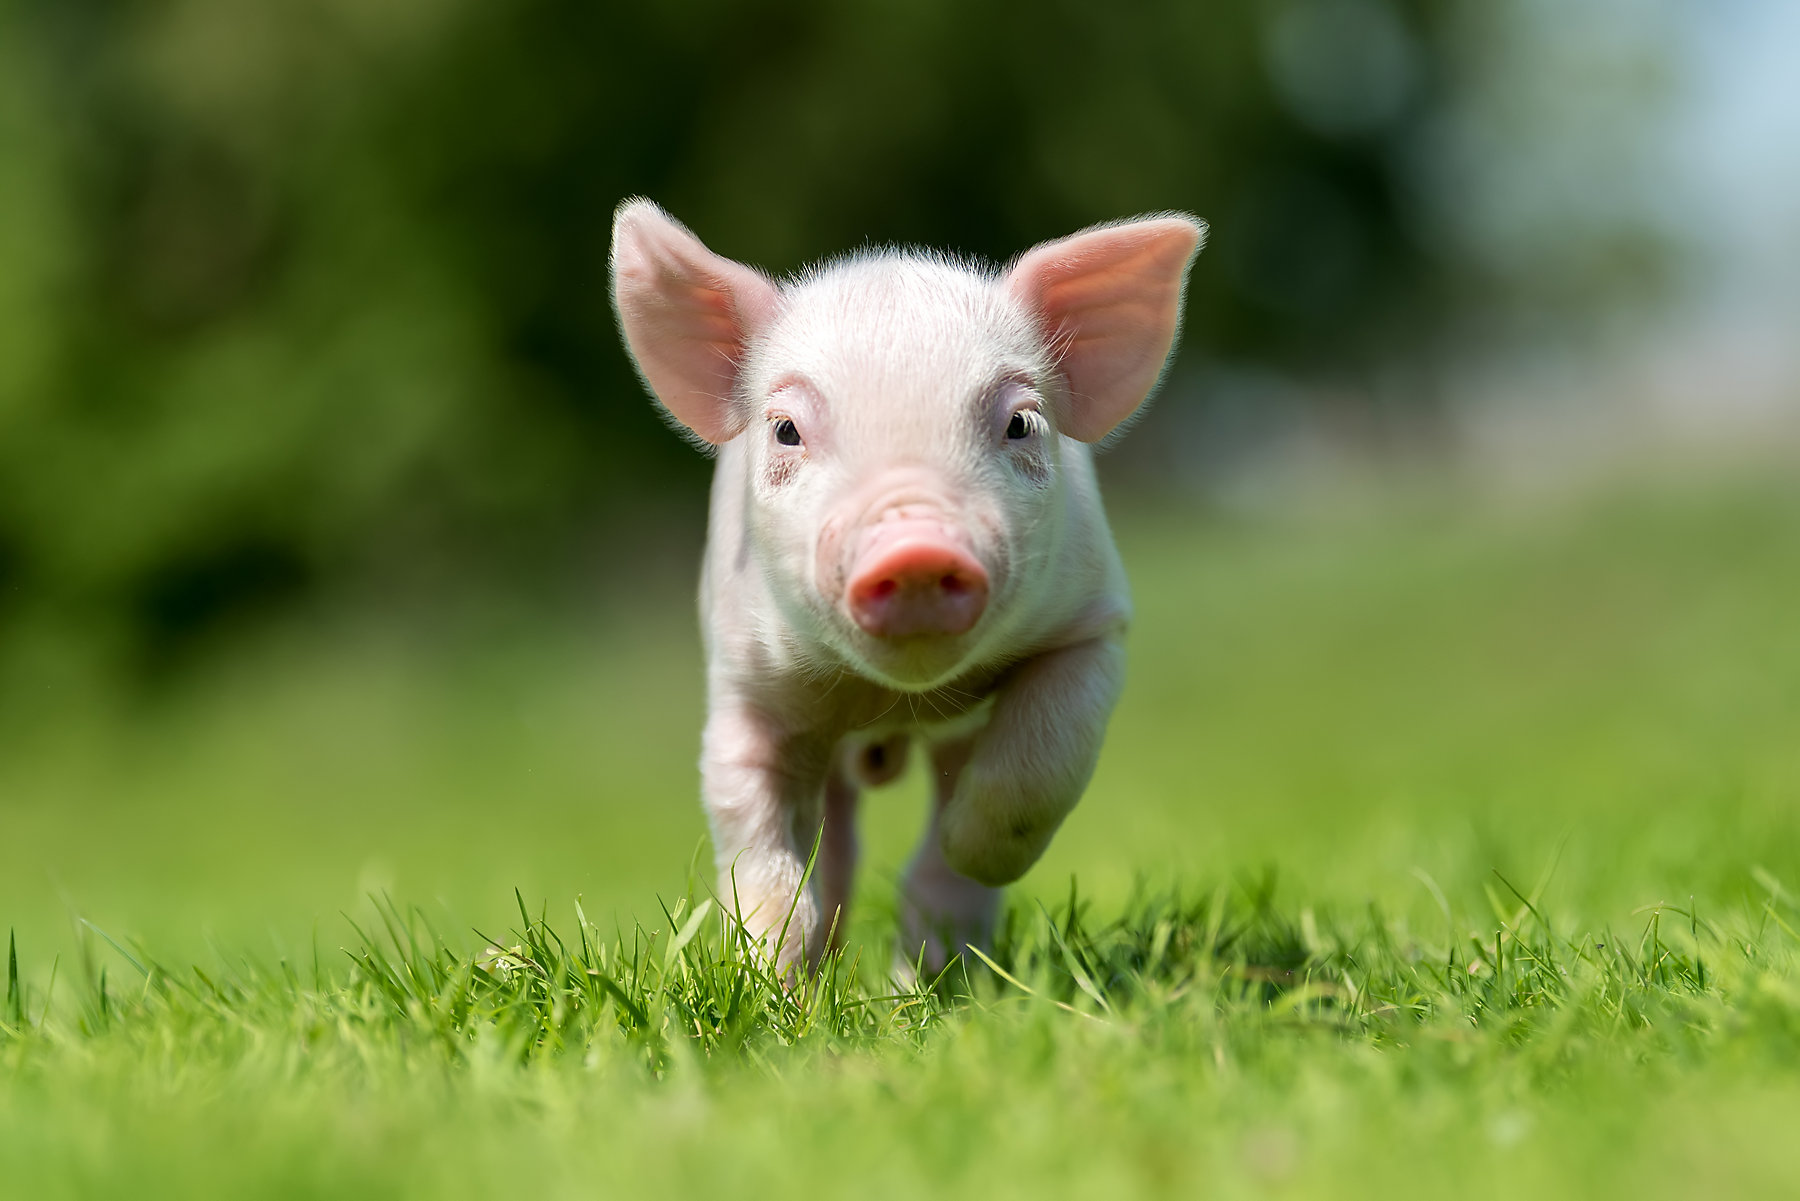 Newborn piglet on spring green grass on a farm; Shutterstock ID 1101099536; BU: KAE; Region: Russia; Purpose: Social media